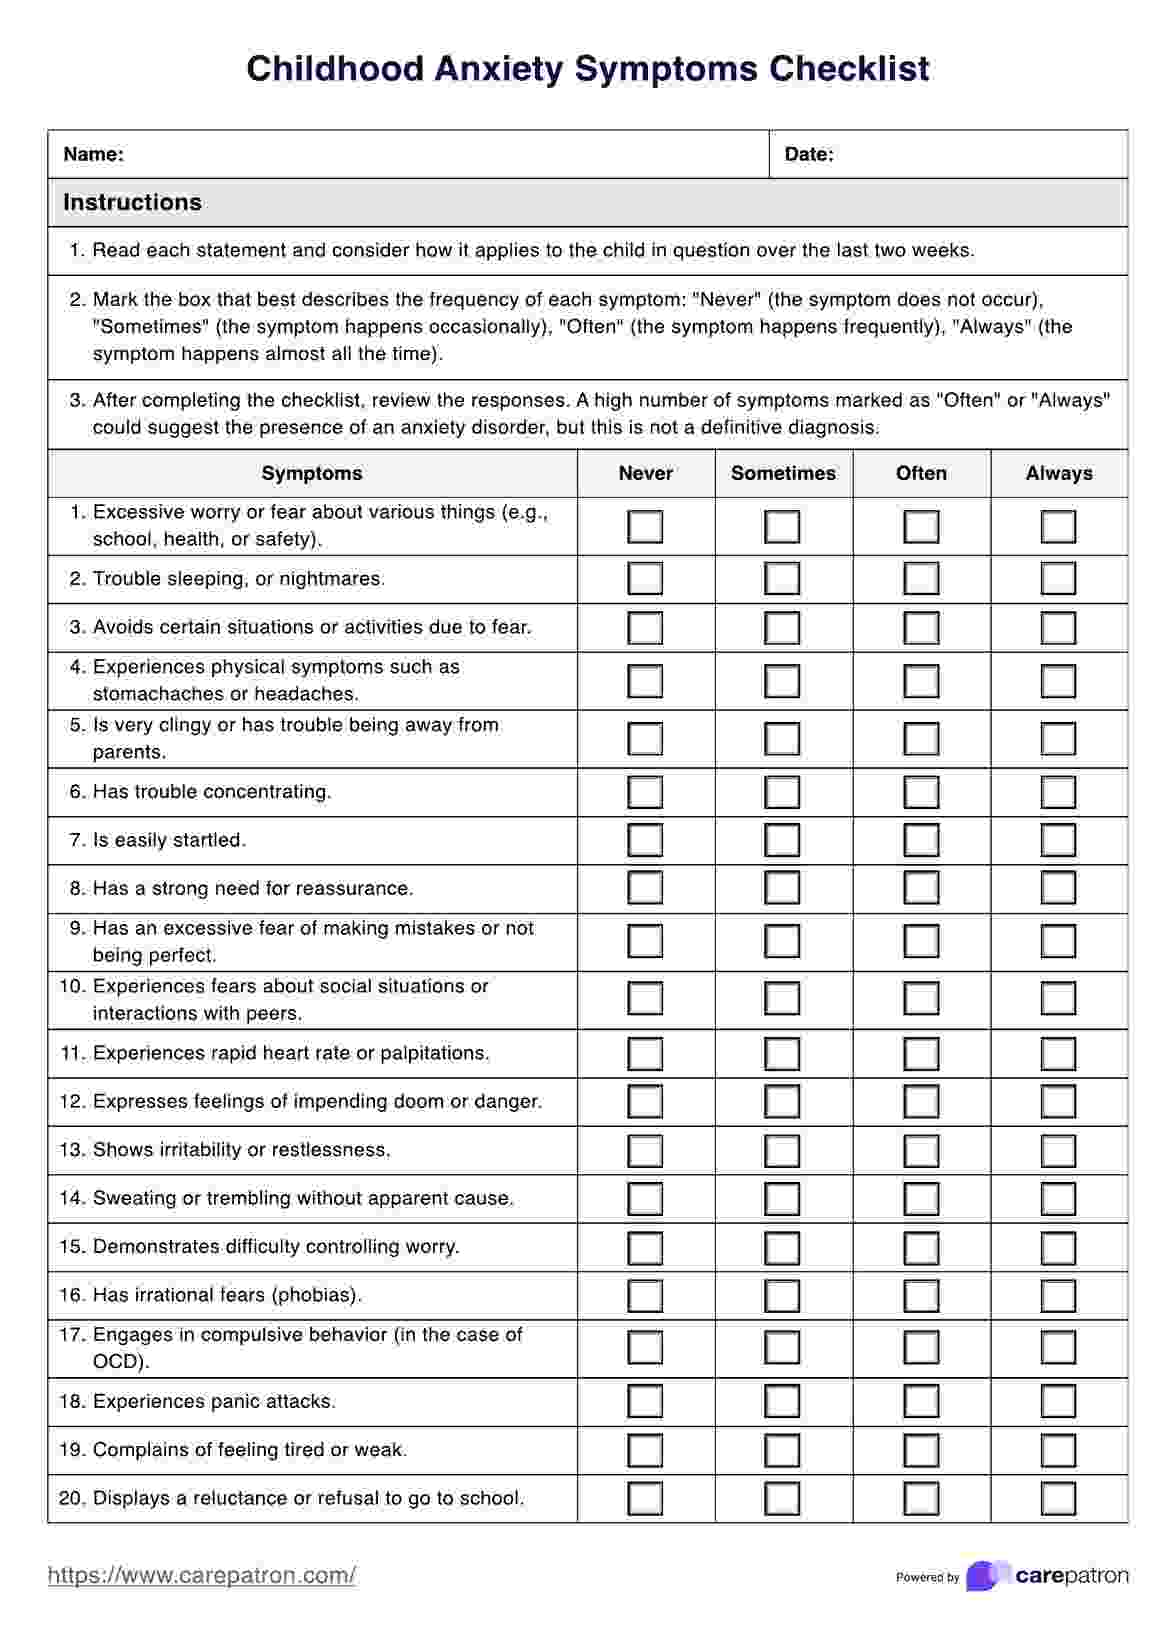 Childhood Anxiety Symptoms Checklist PDF Example